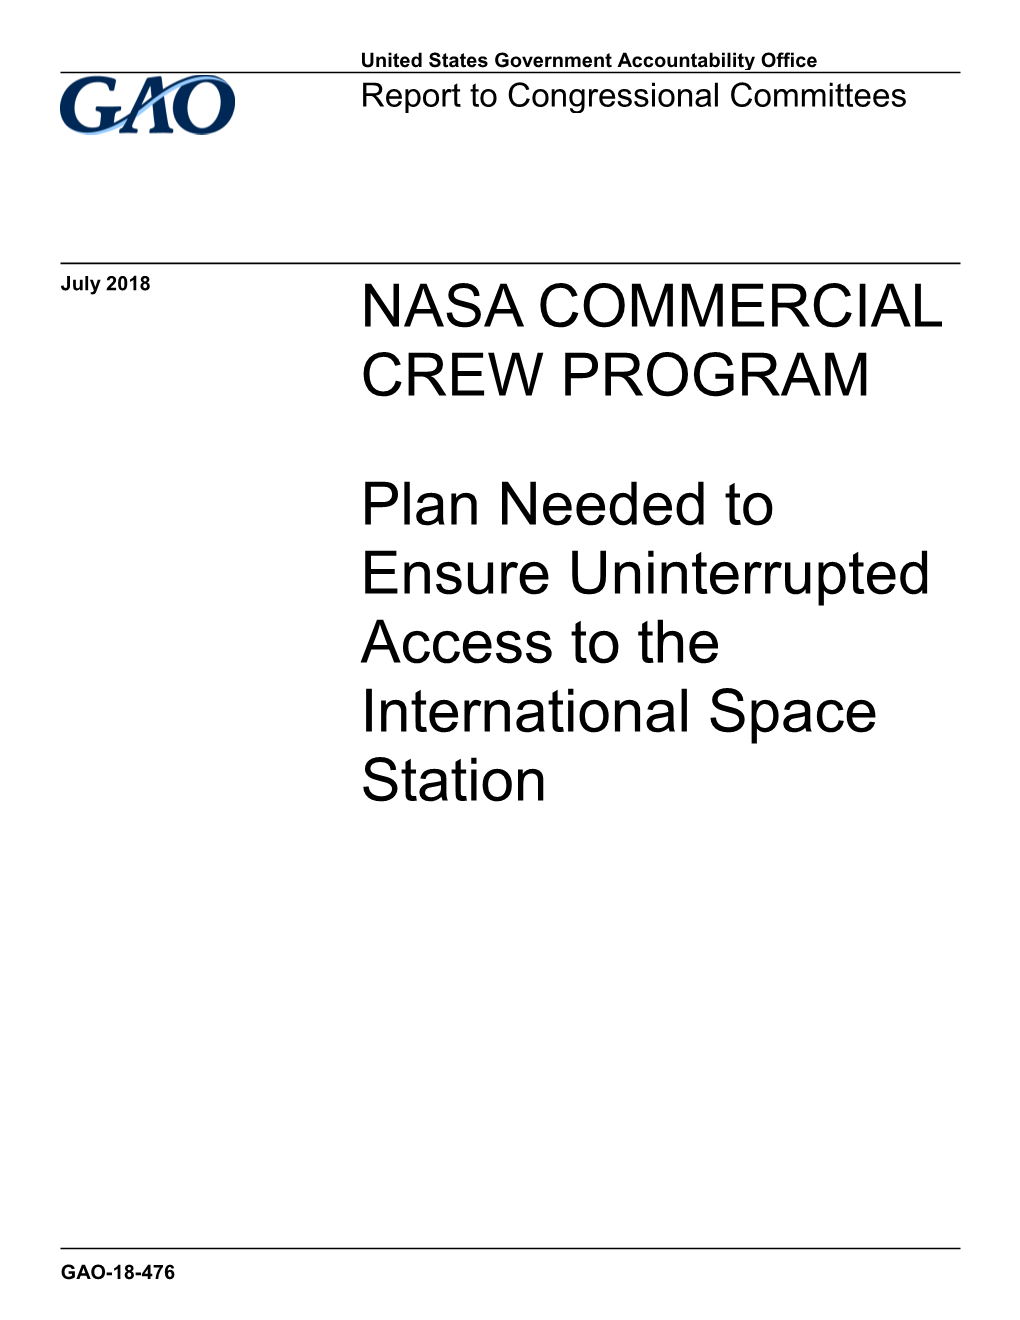 GAO-18-476, NASA Commercial Crew Program: Plan Needed to Ensure